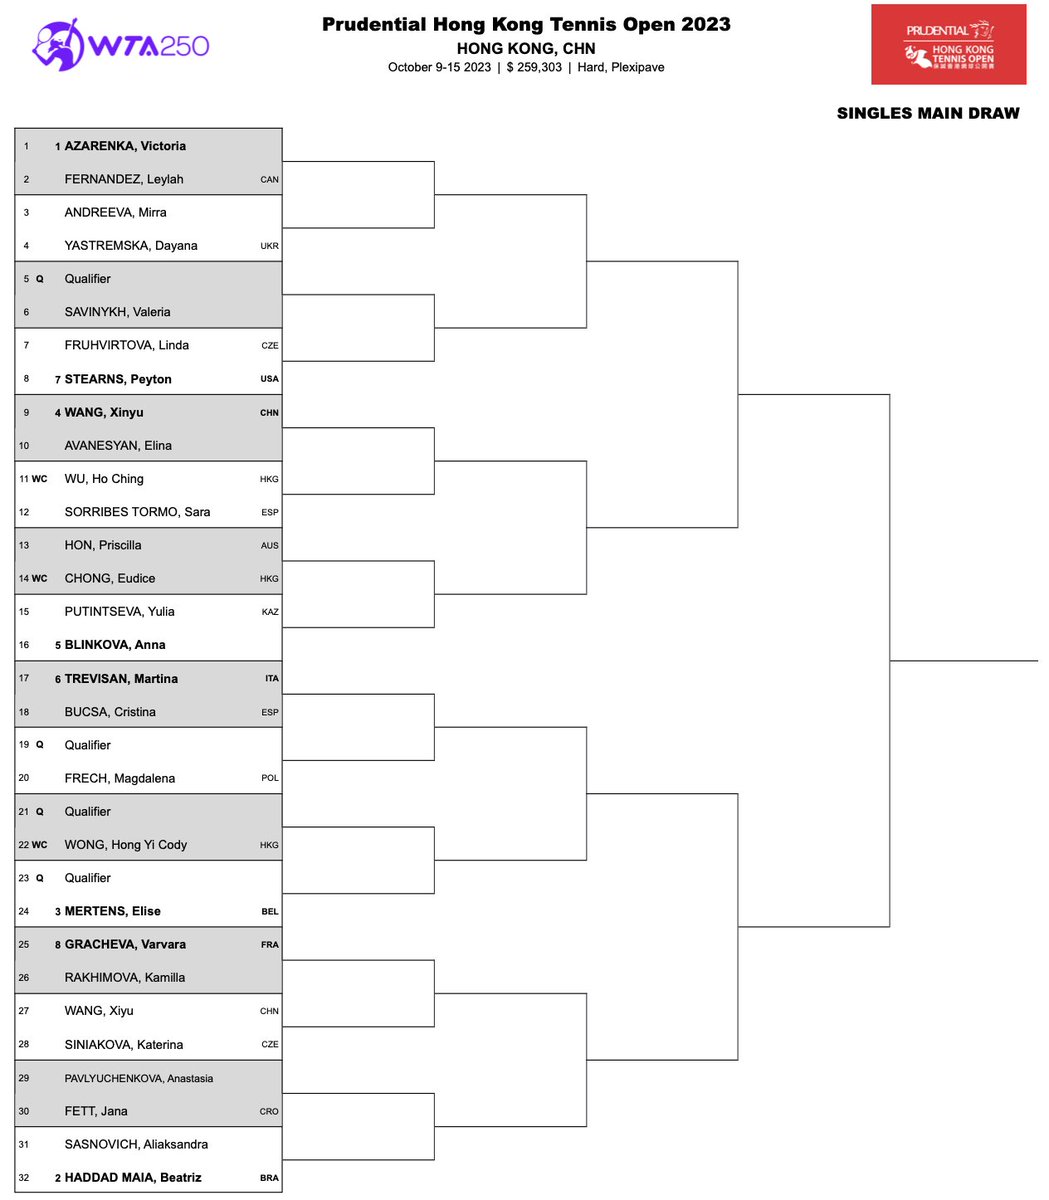 Main draw in Hong Kong (WTA 250), where Victoria Azarenka and Beatriz Haddad Maia are the top seeds.